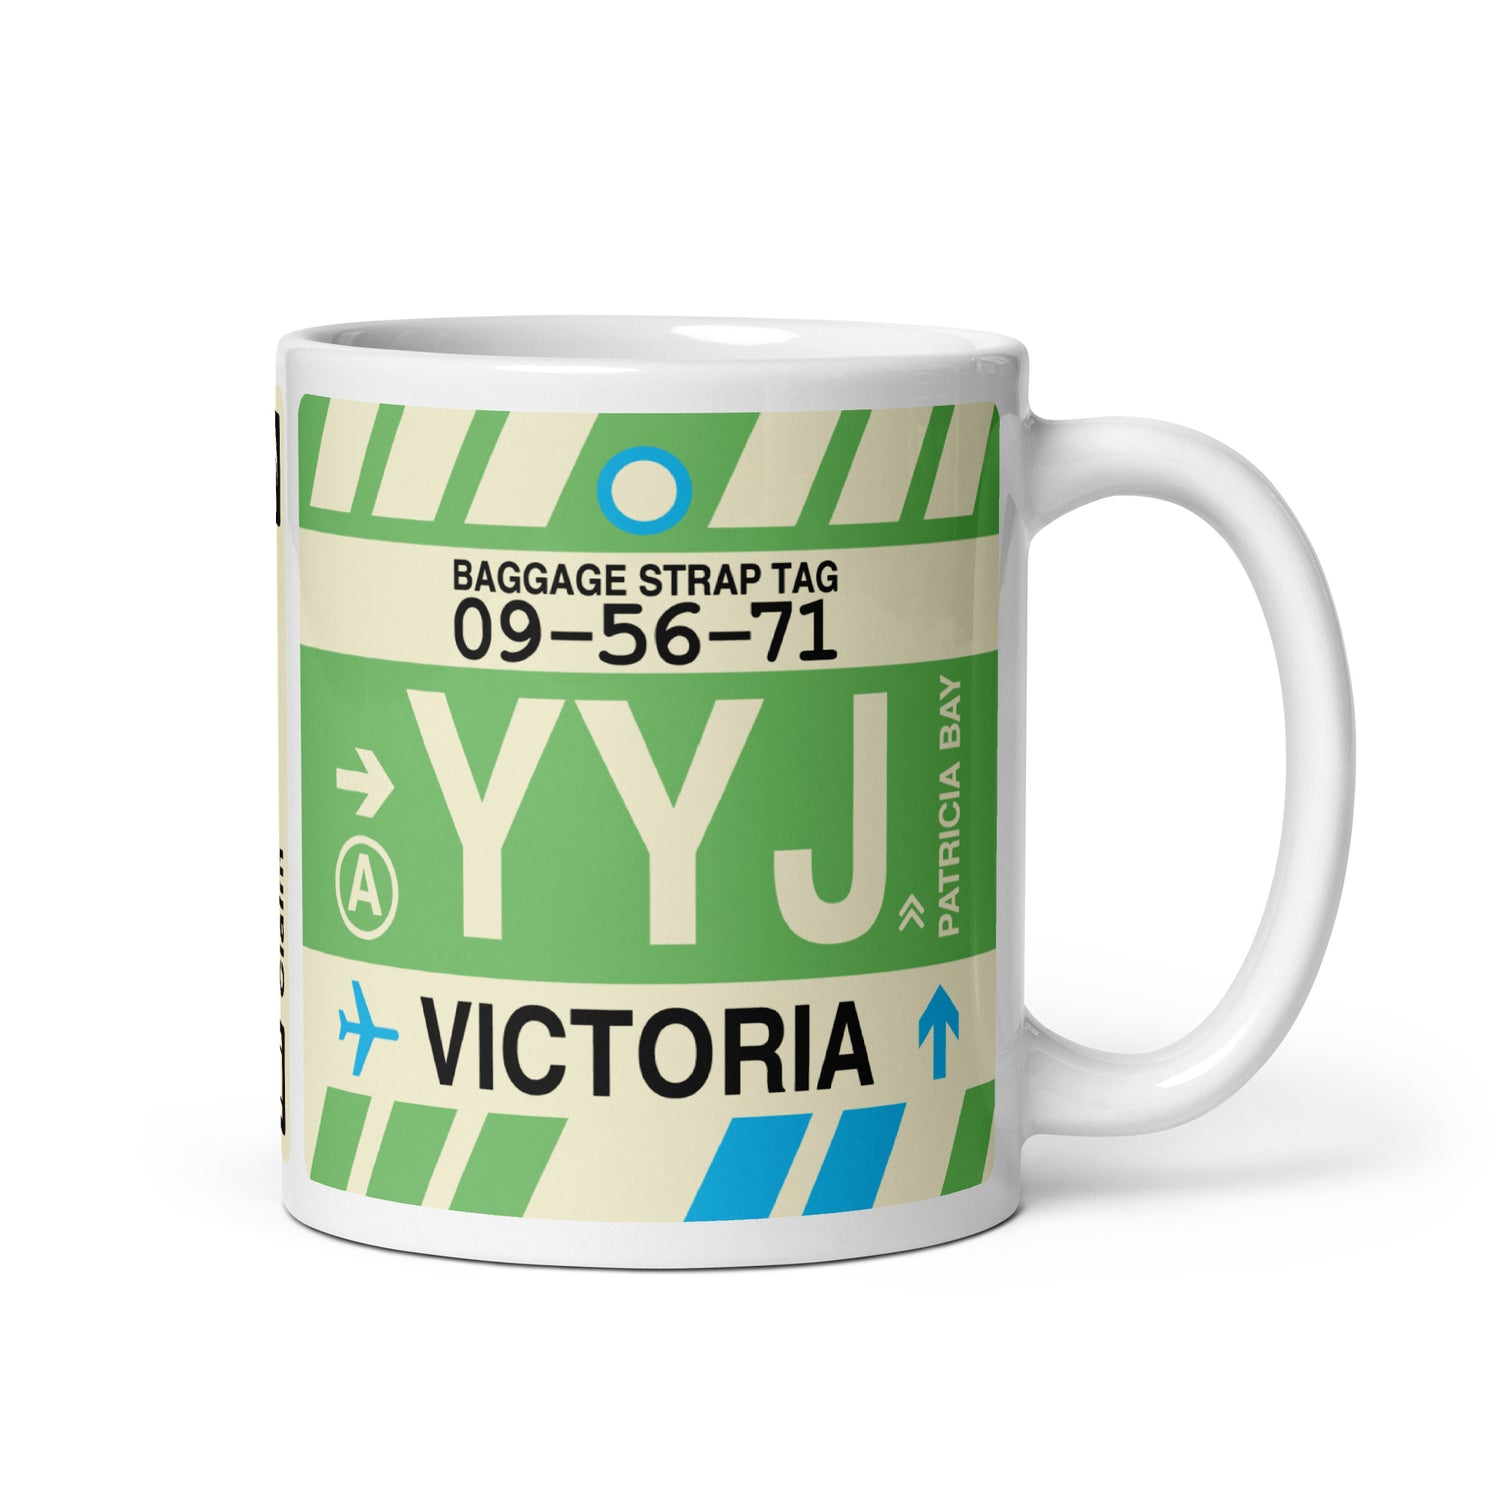 Victoria British Columbia Coffee Mugs and Water Bottles • YYJ Airport Code